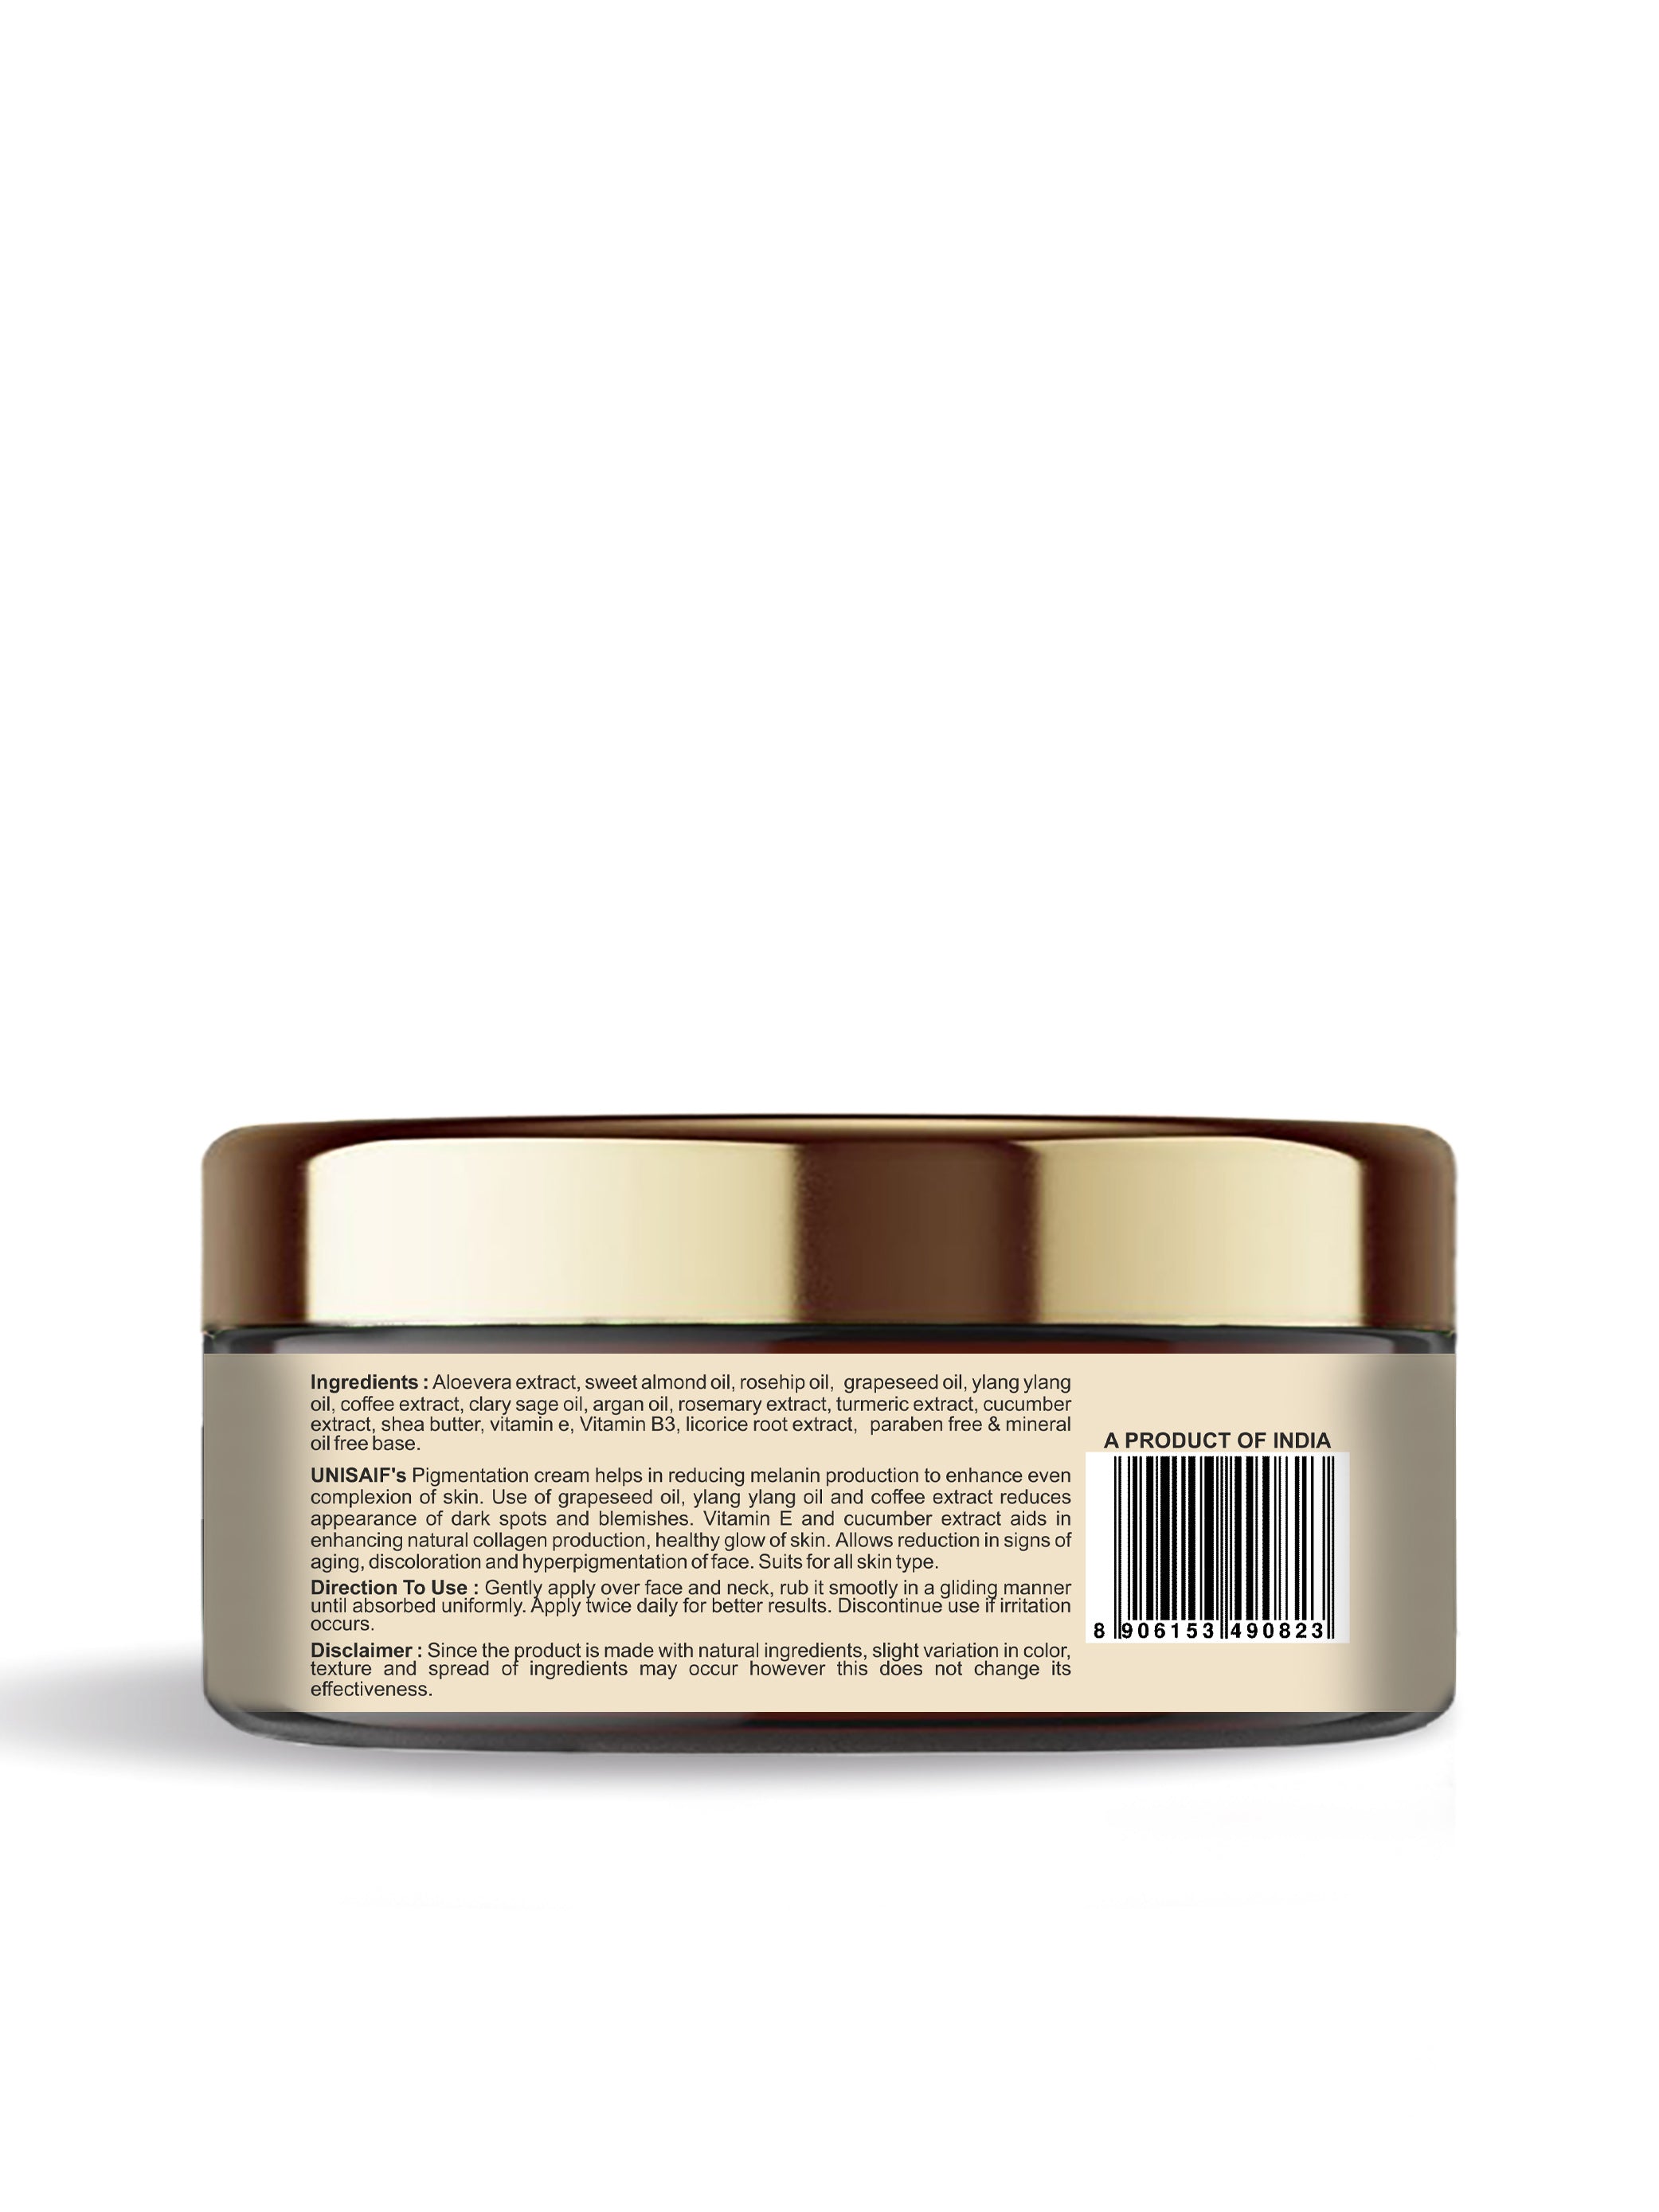 Pigmentation Organic Cream (50g) with Rosehip & Lemon Oil For |Pigmentation| Darkness| Dullness| Dark Spots